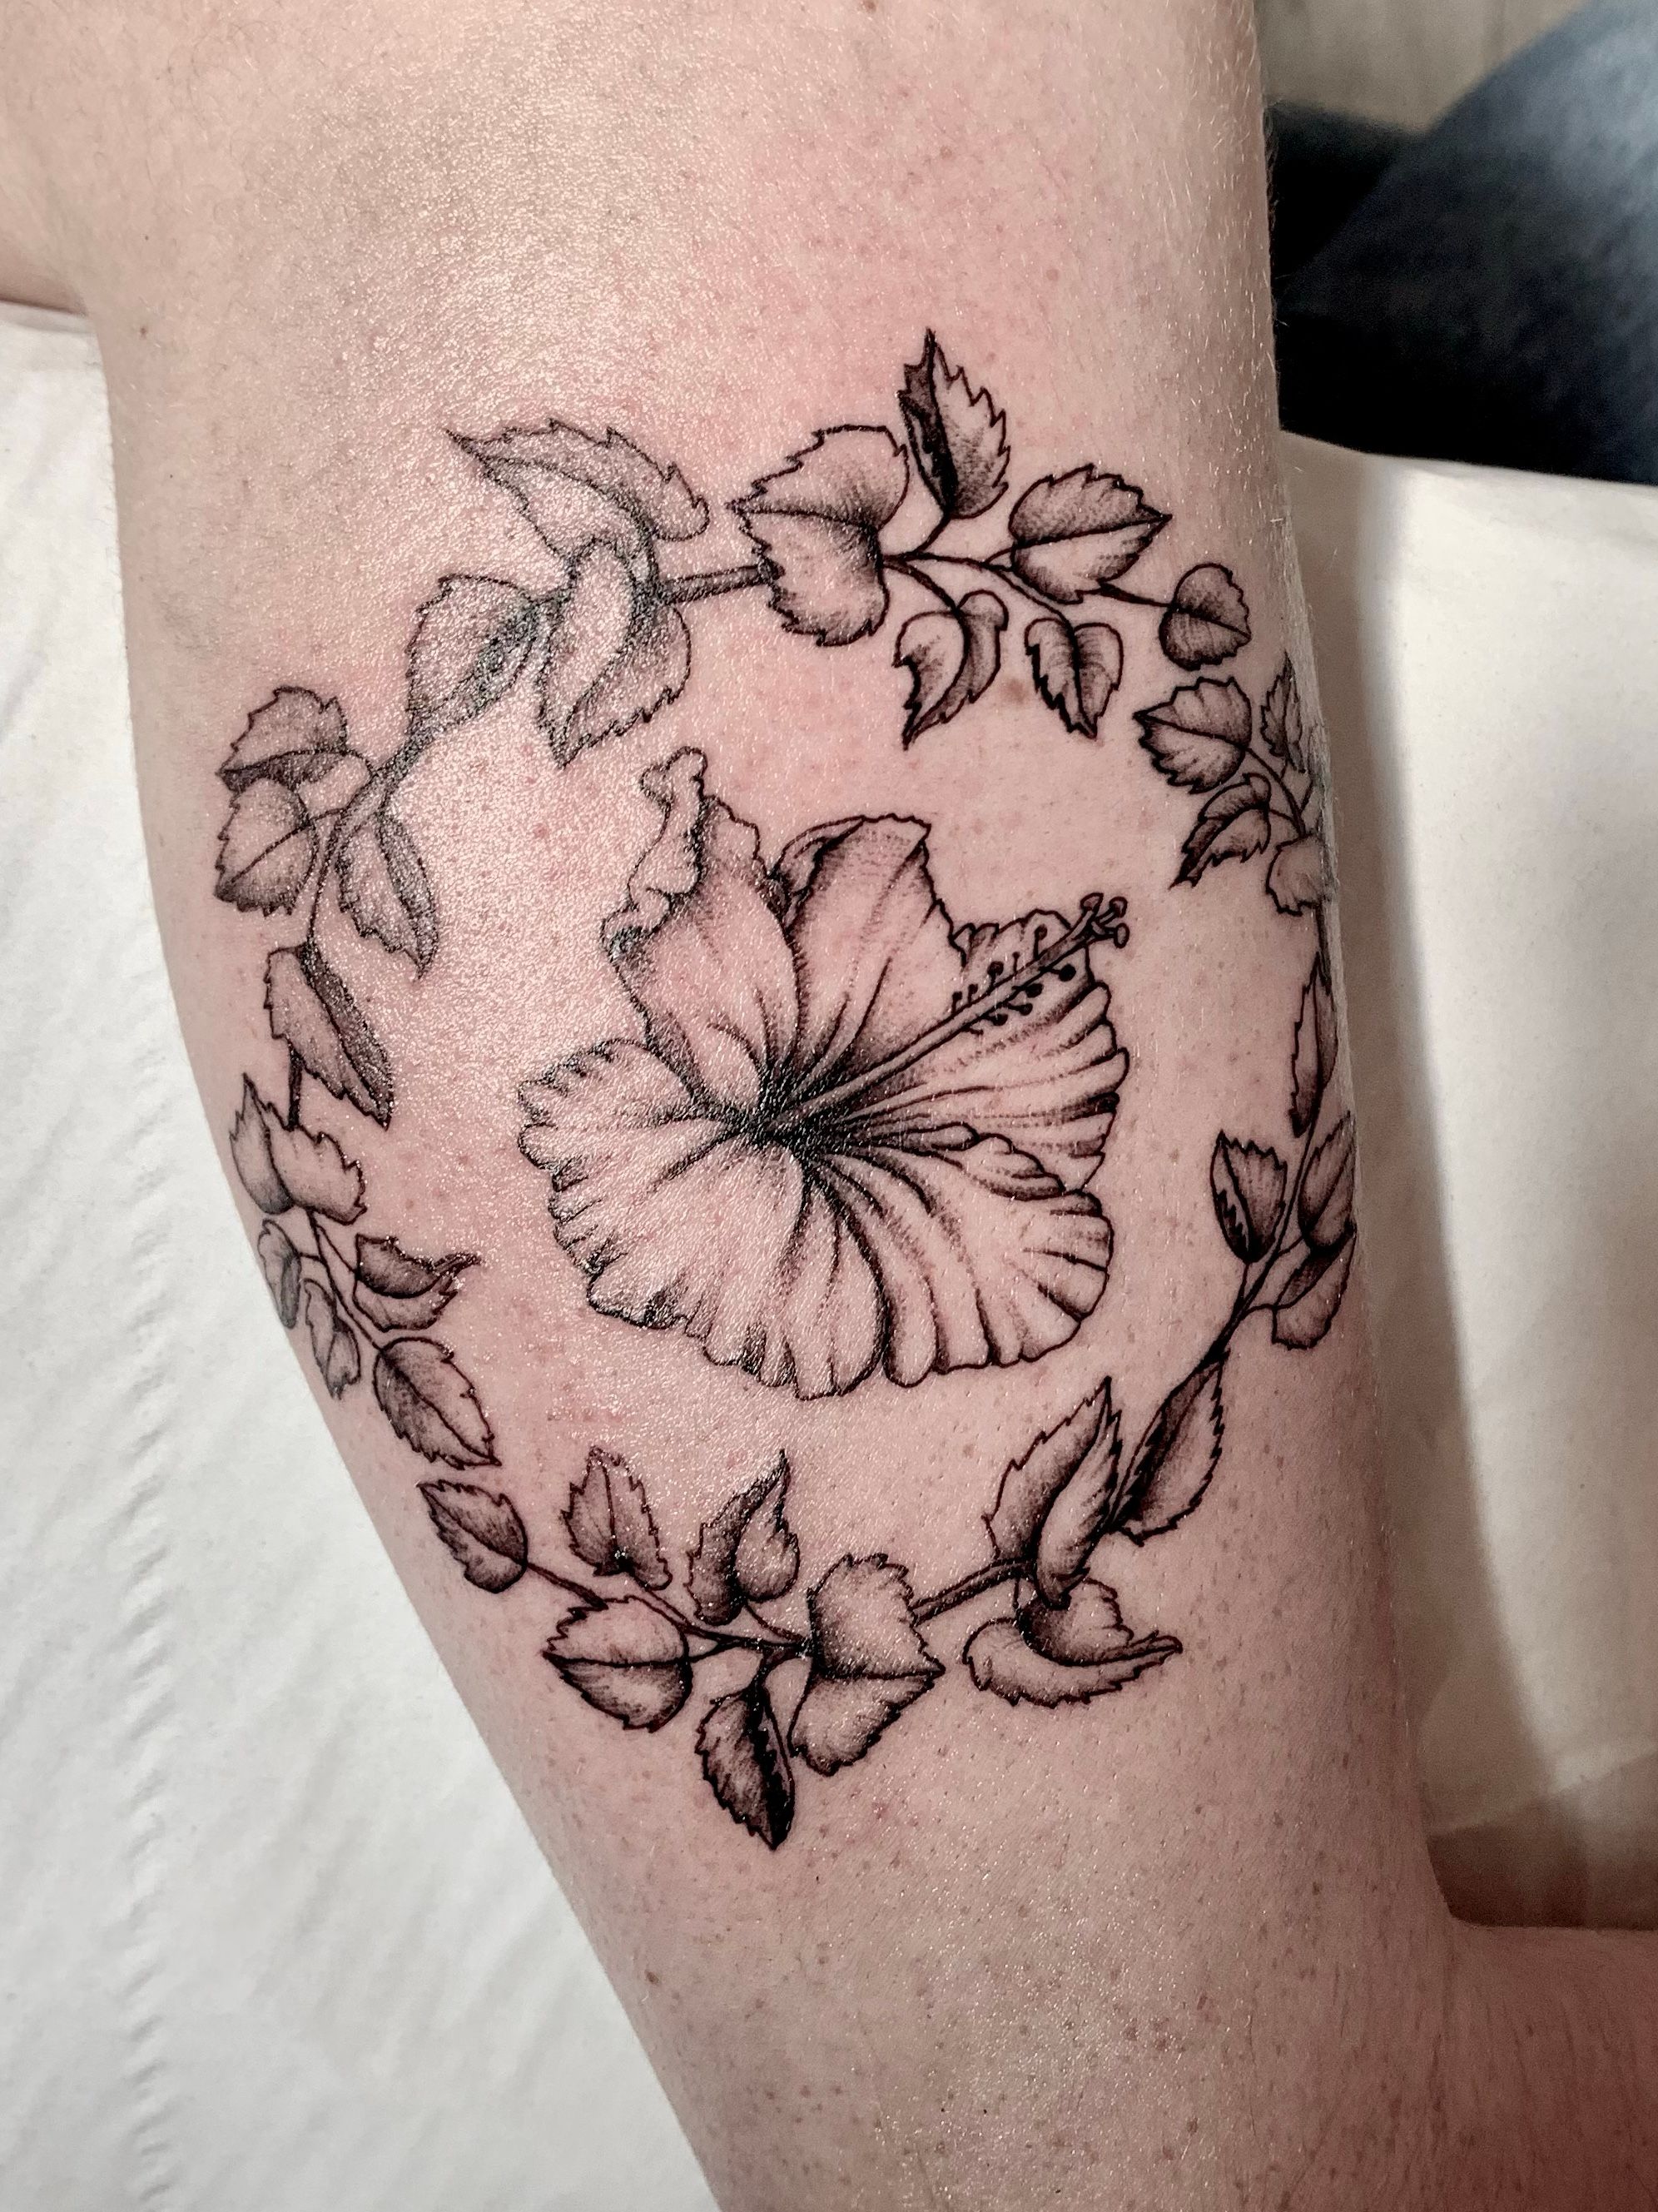 Flowers tattoo by Kupo-Nut89 on DeviantArt